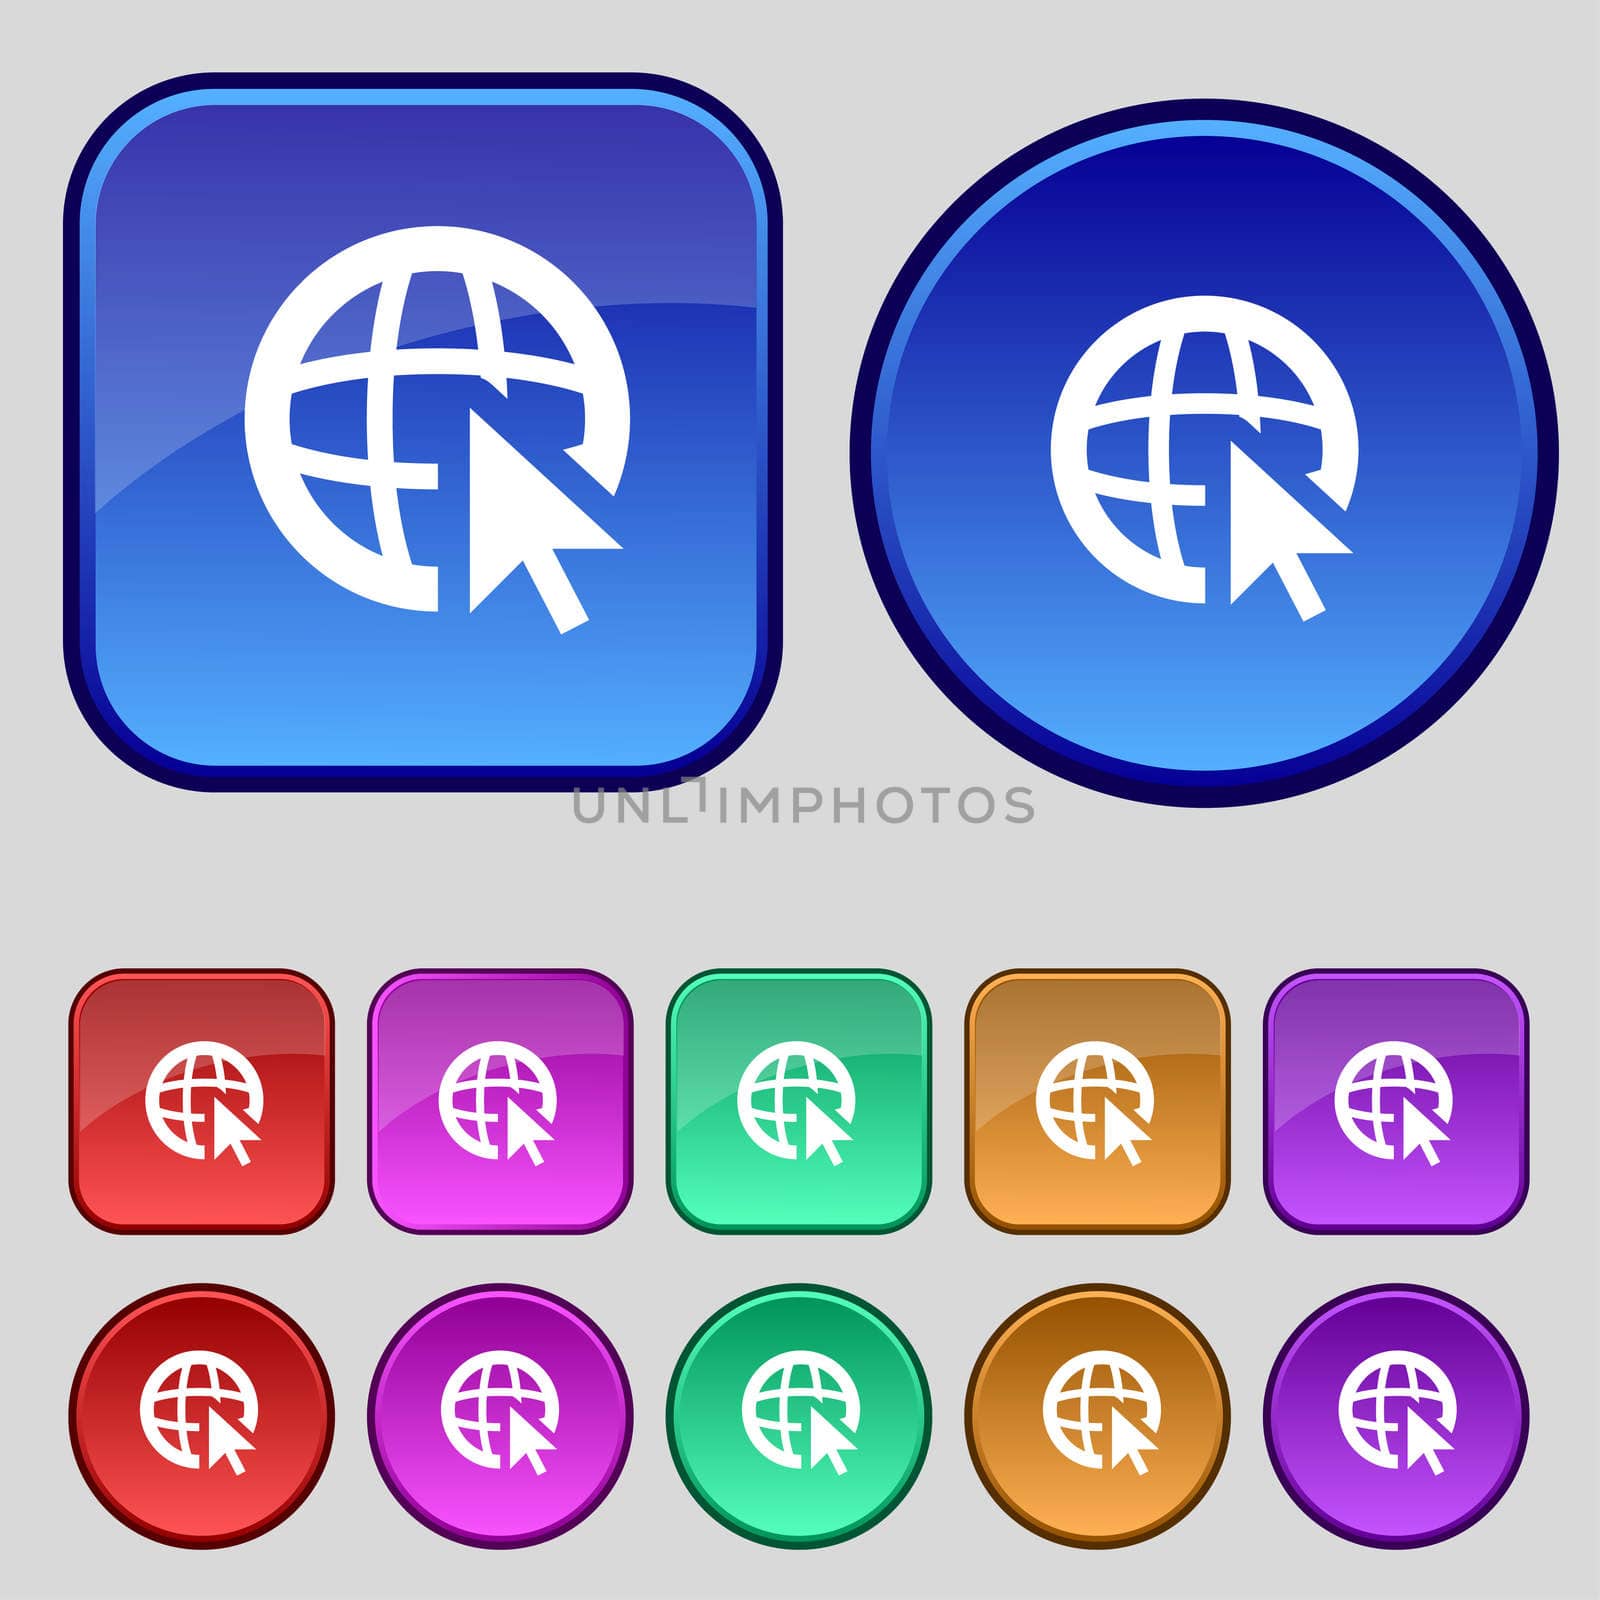 Internet sign icon. World wide web symbol. Cursor pointer. Set colour buttons illustration